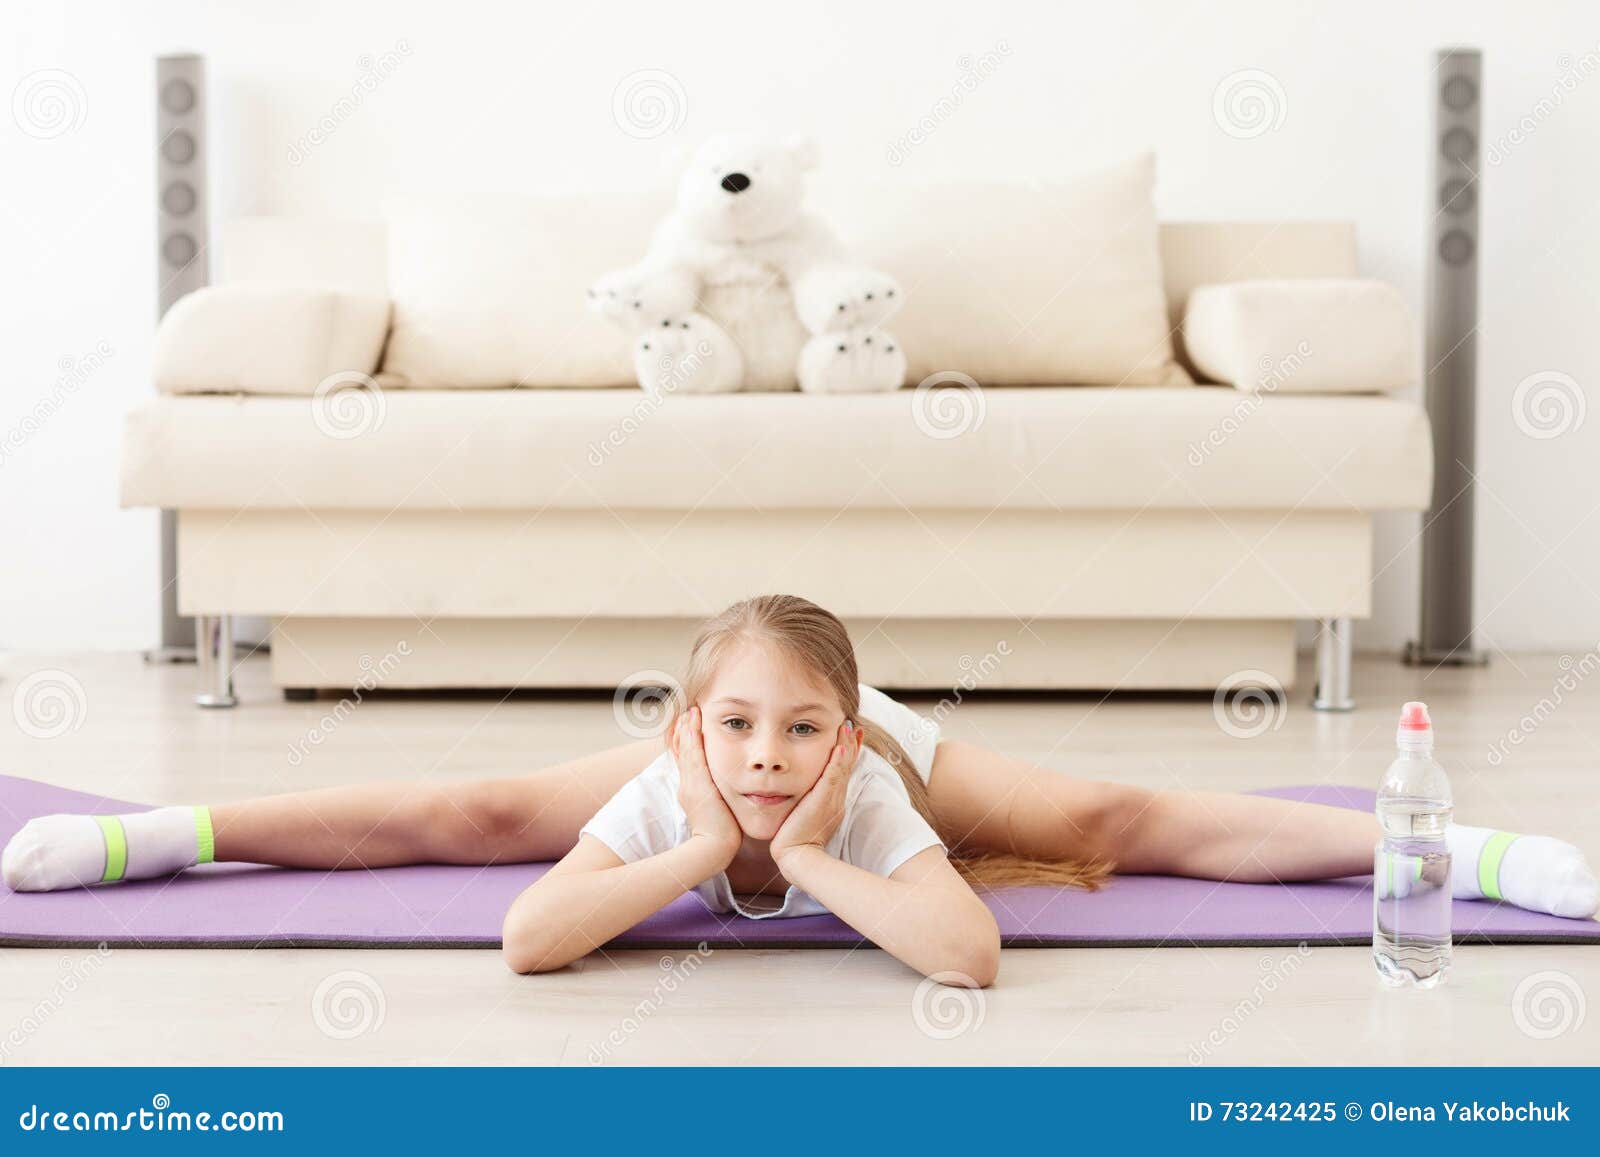 https://thumbs.dreamstime.com/z/little-girl-practicing-yoga-stretch-success-lying-floor-doing-stretching-sport-mat-73242425.jpg